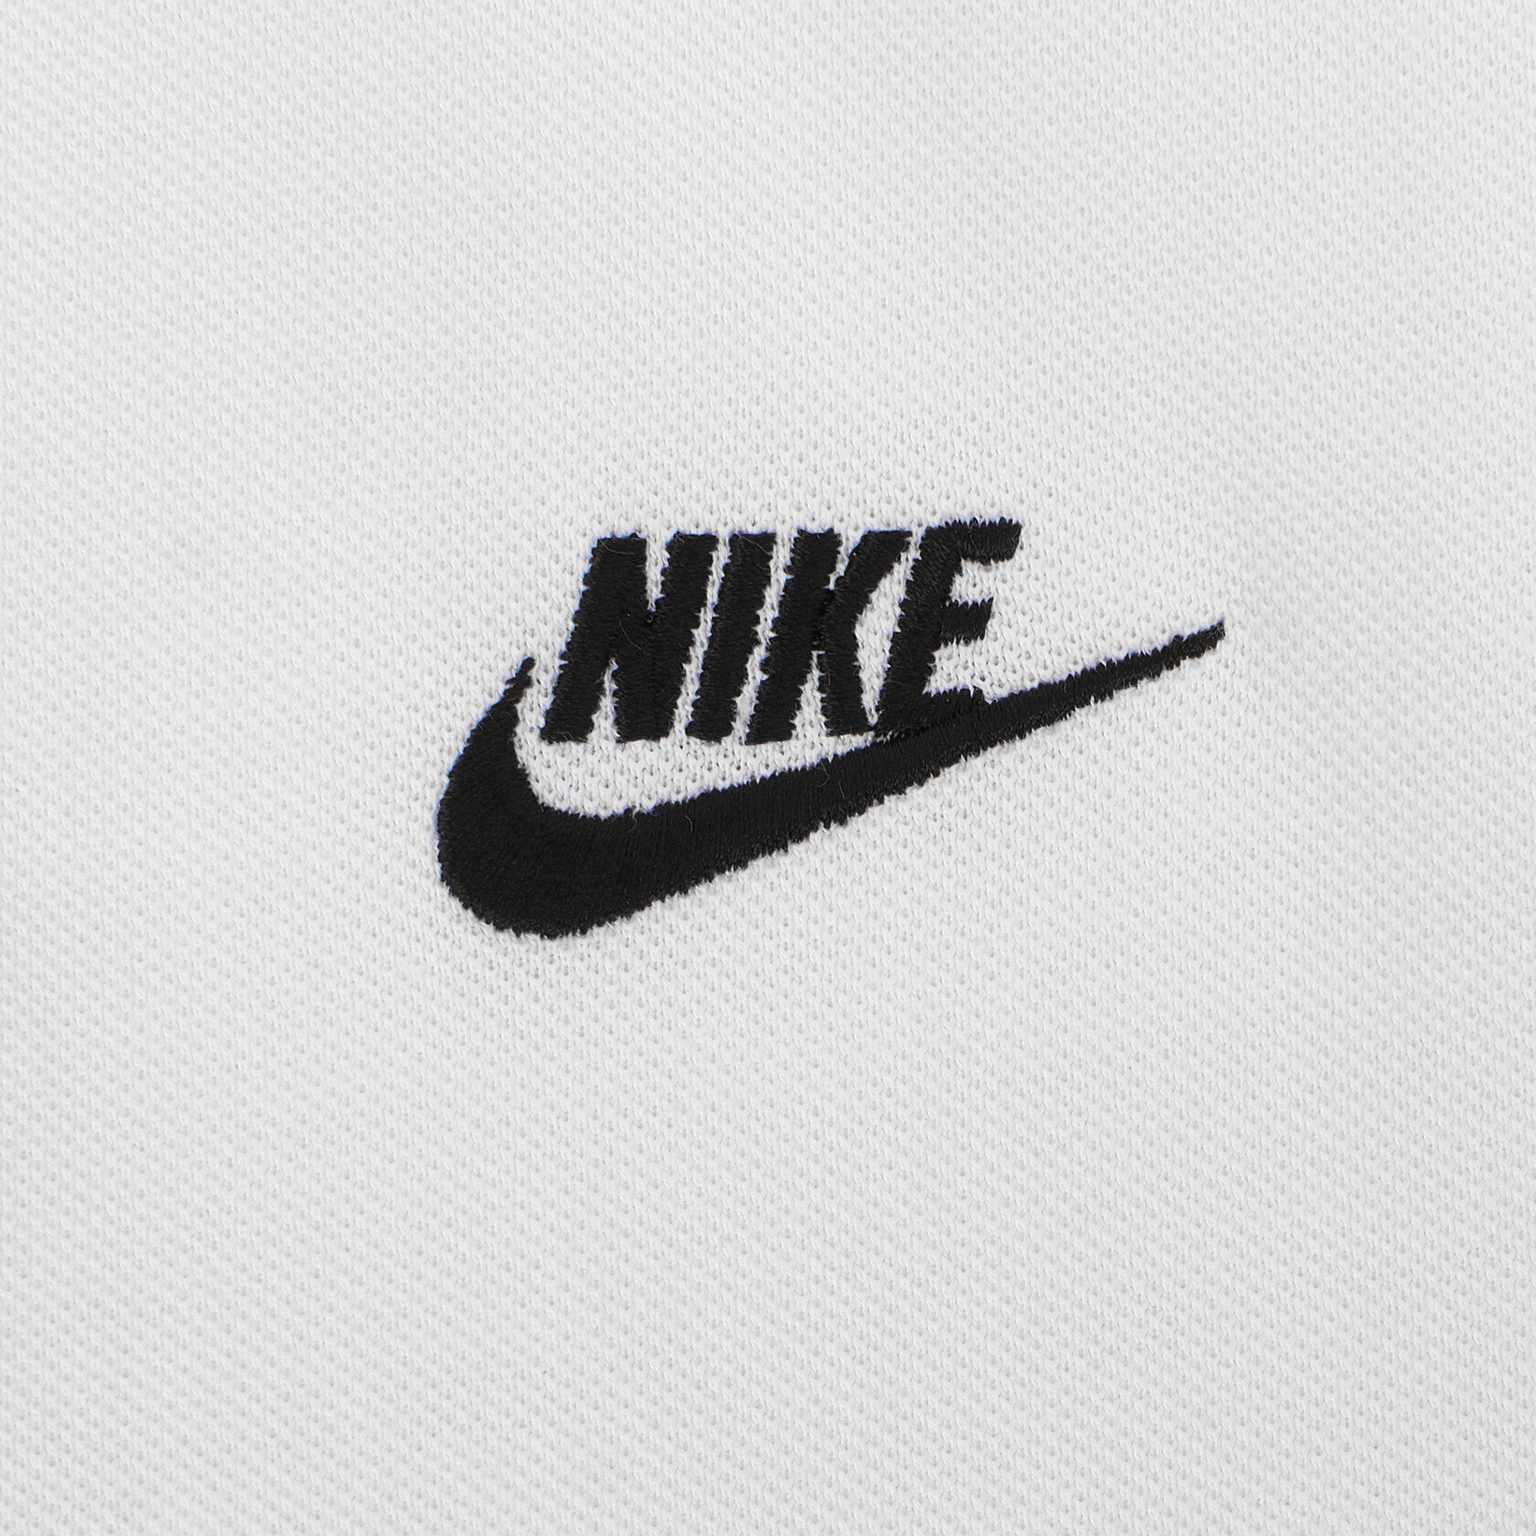 Поло Nike Sportswear Matchup CJ4456-100